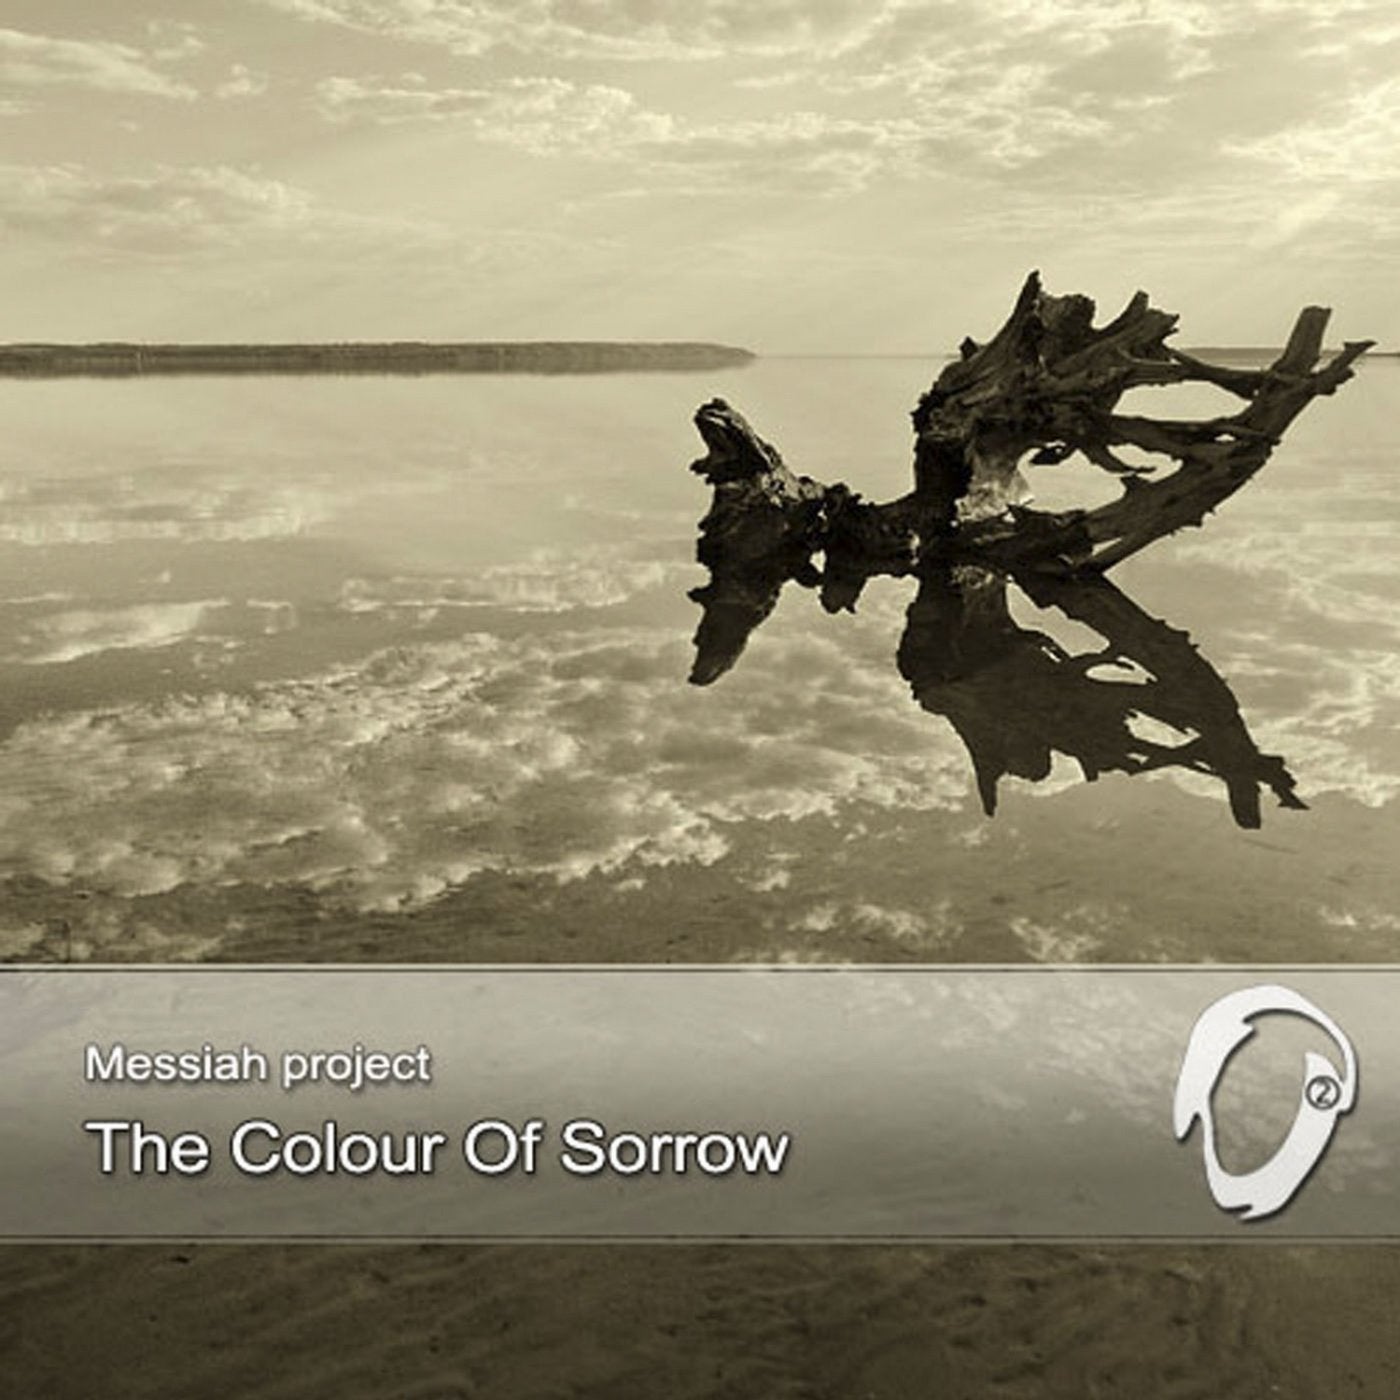 The Colour of Sorrow